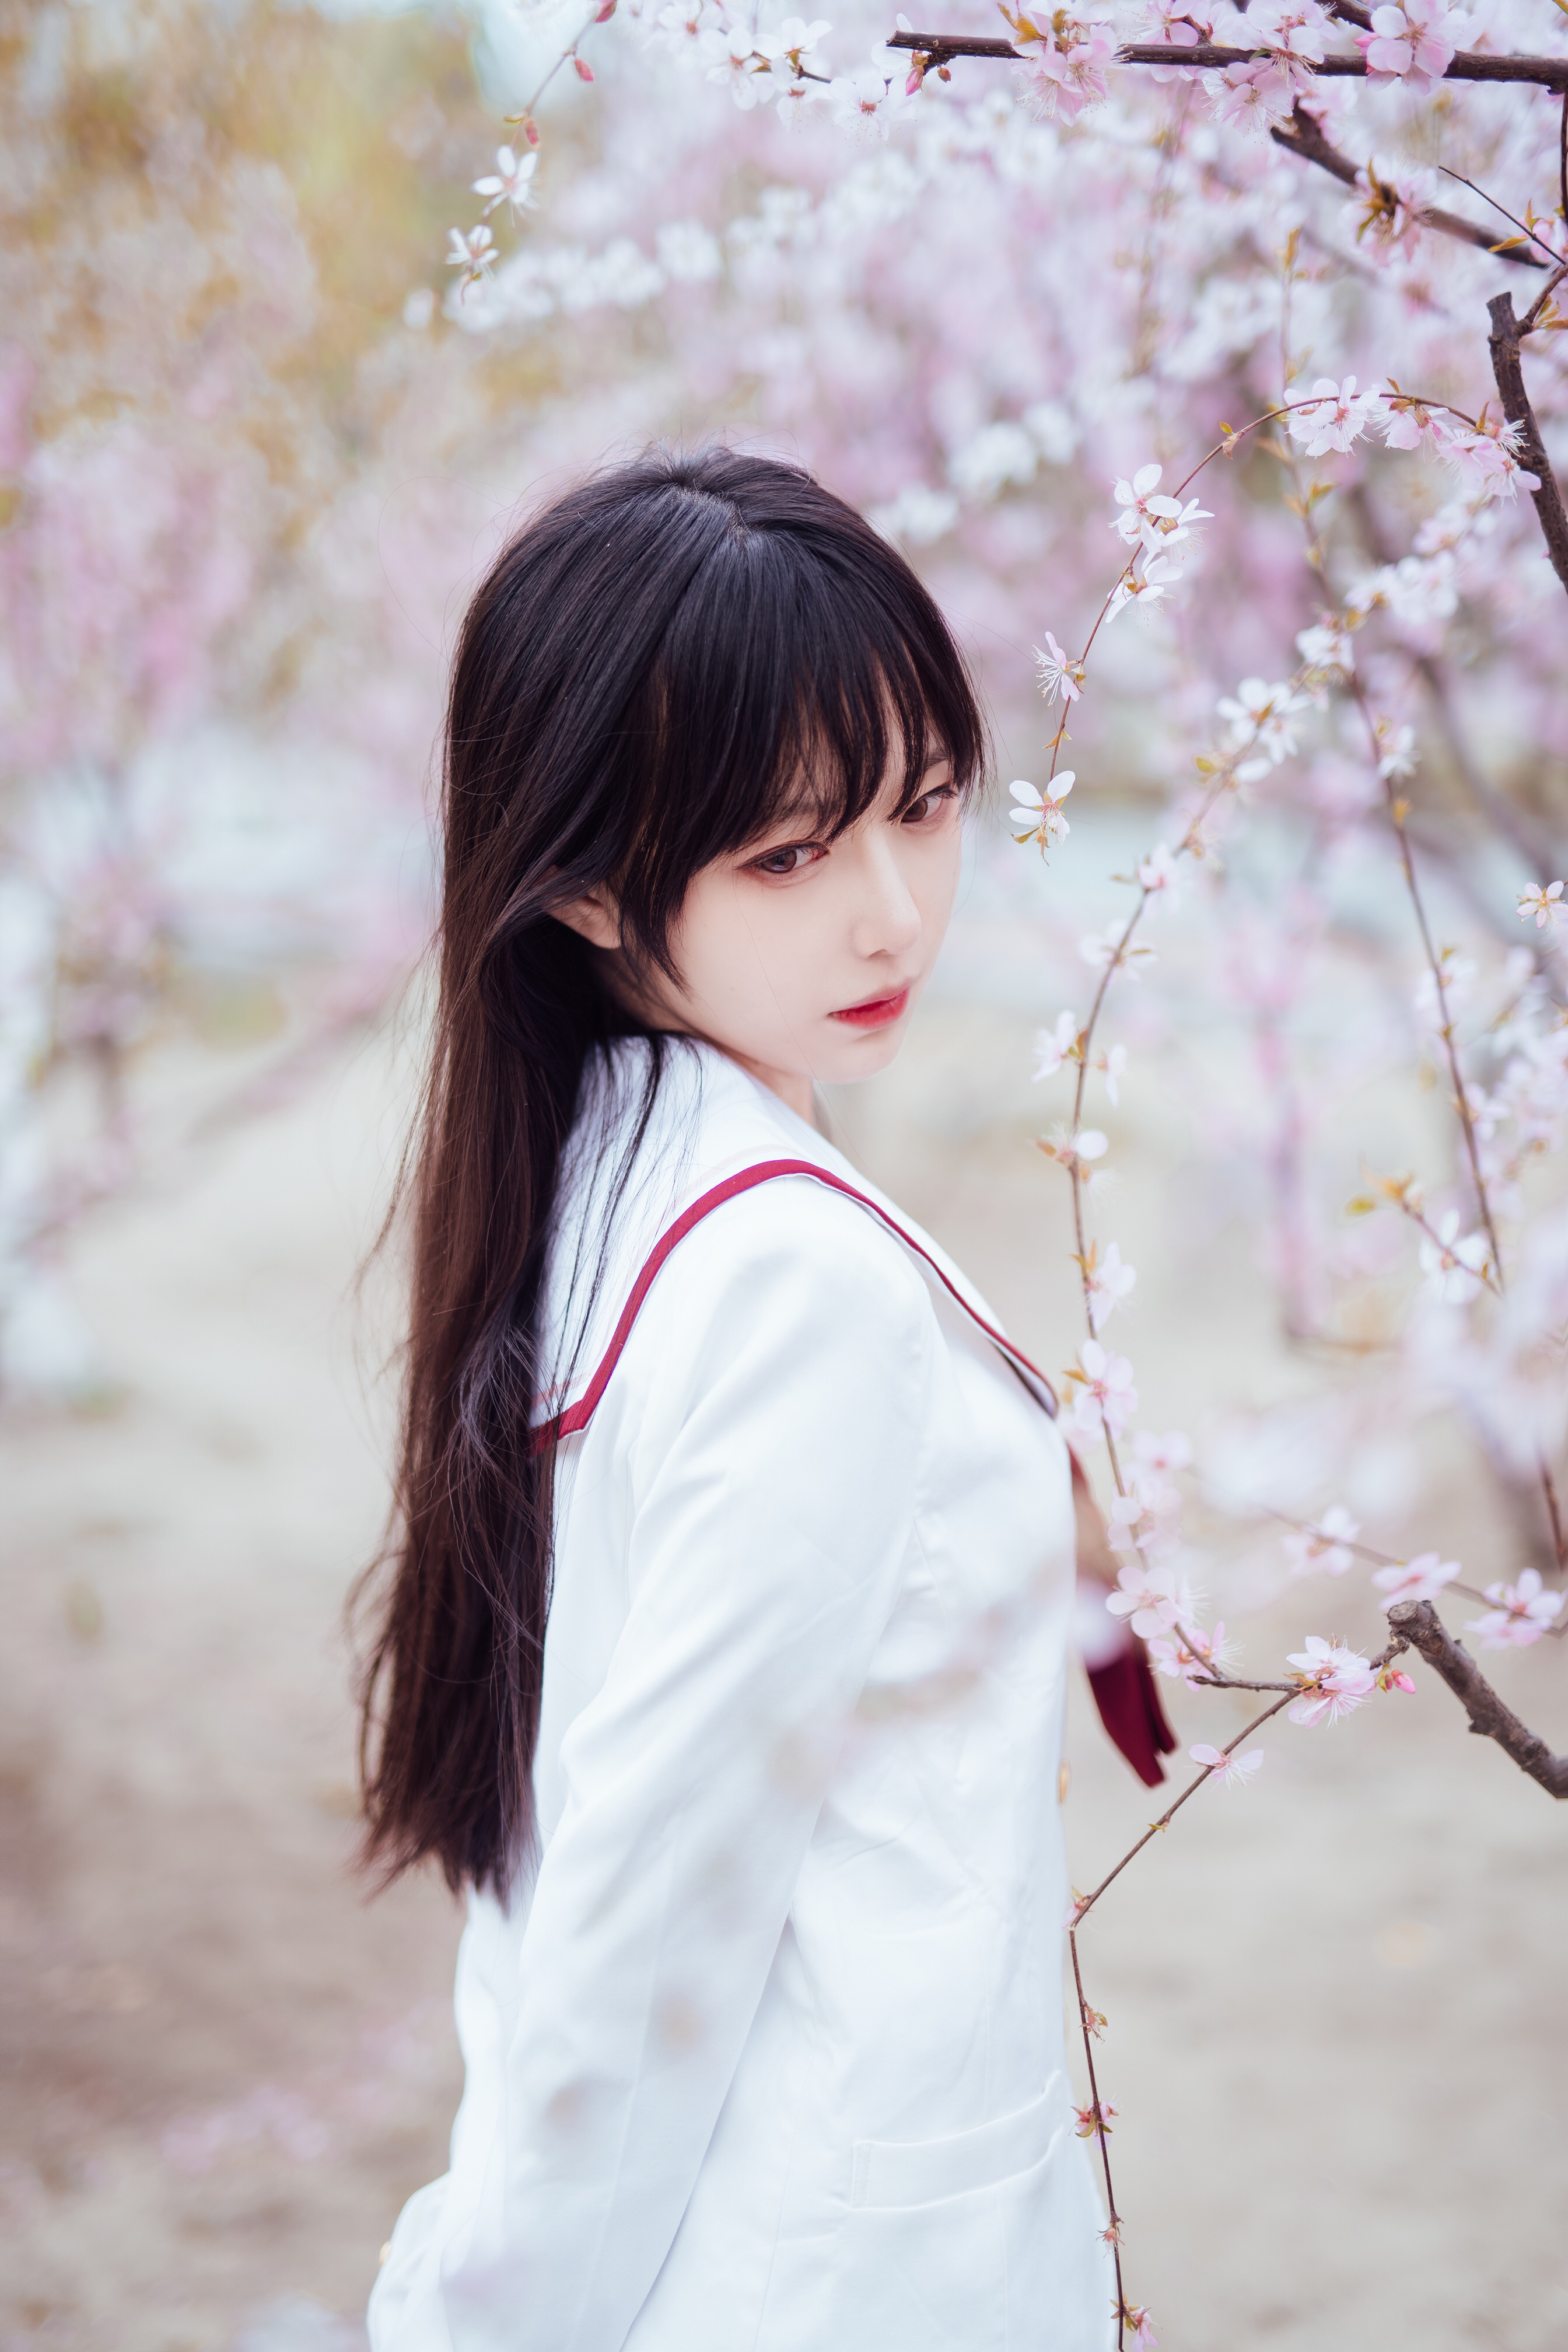 Cherry Blossom Asian 2688x4032